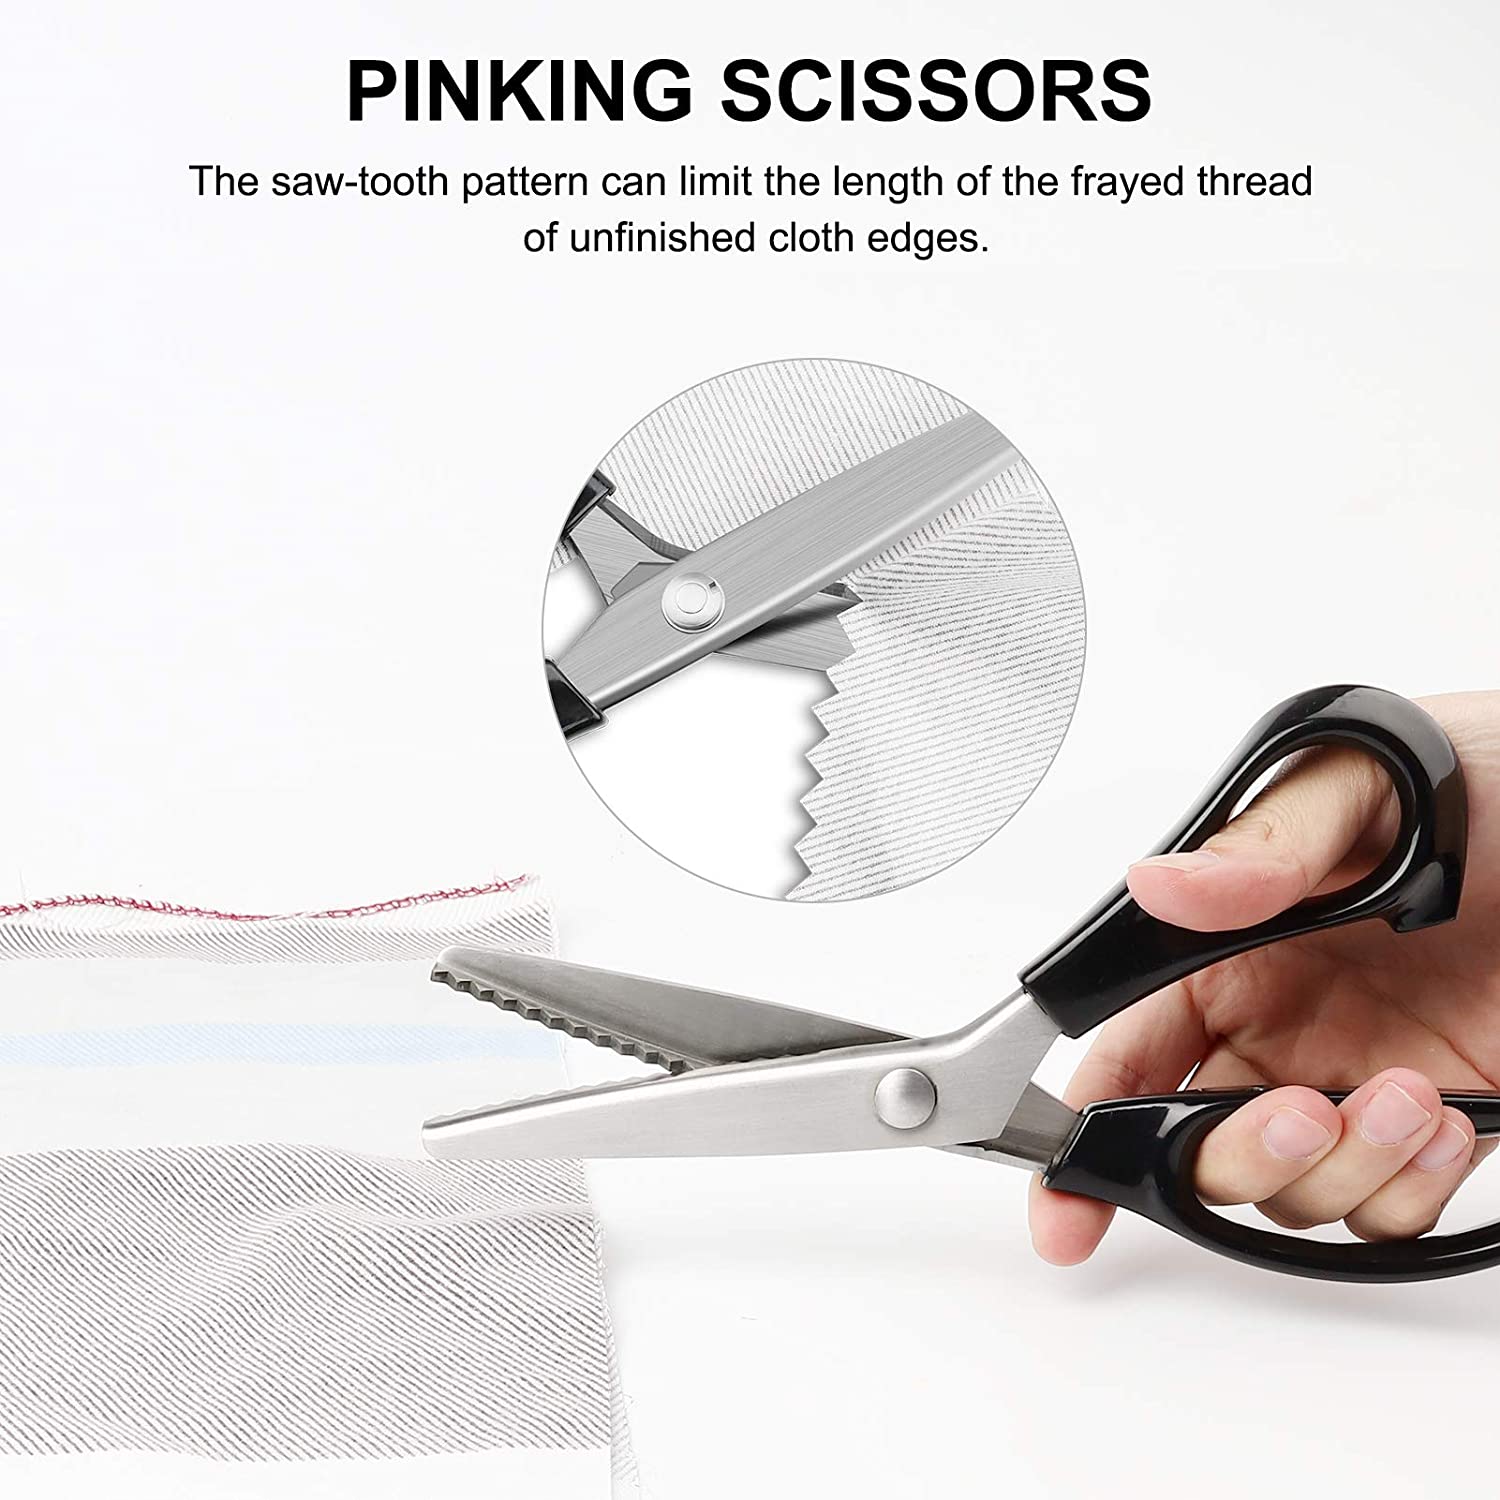 Sewing Serrated Scissors